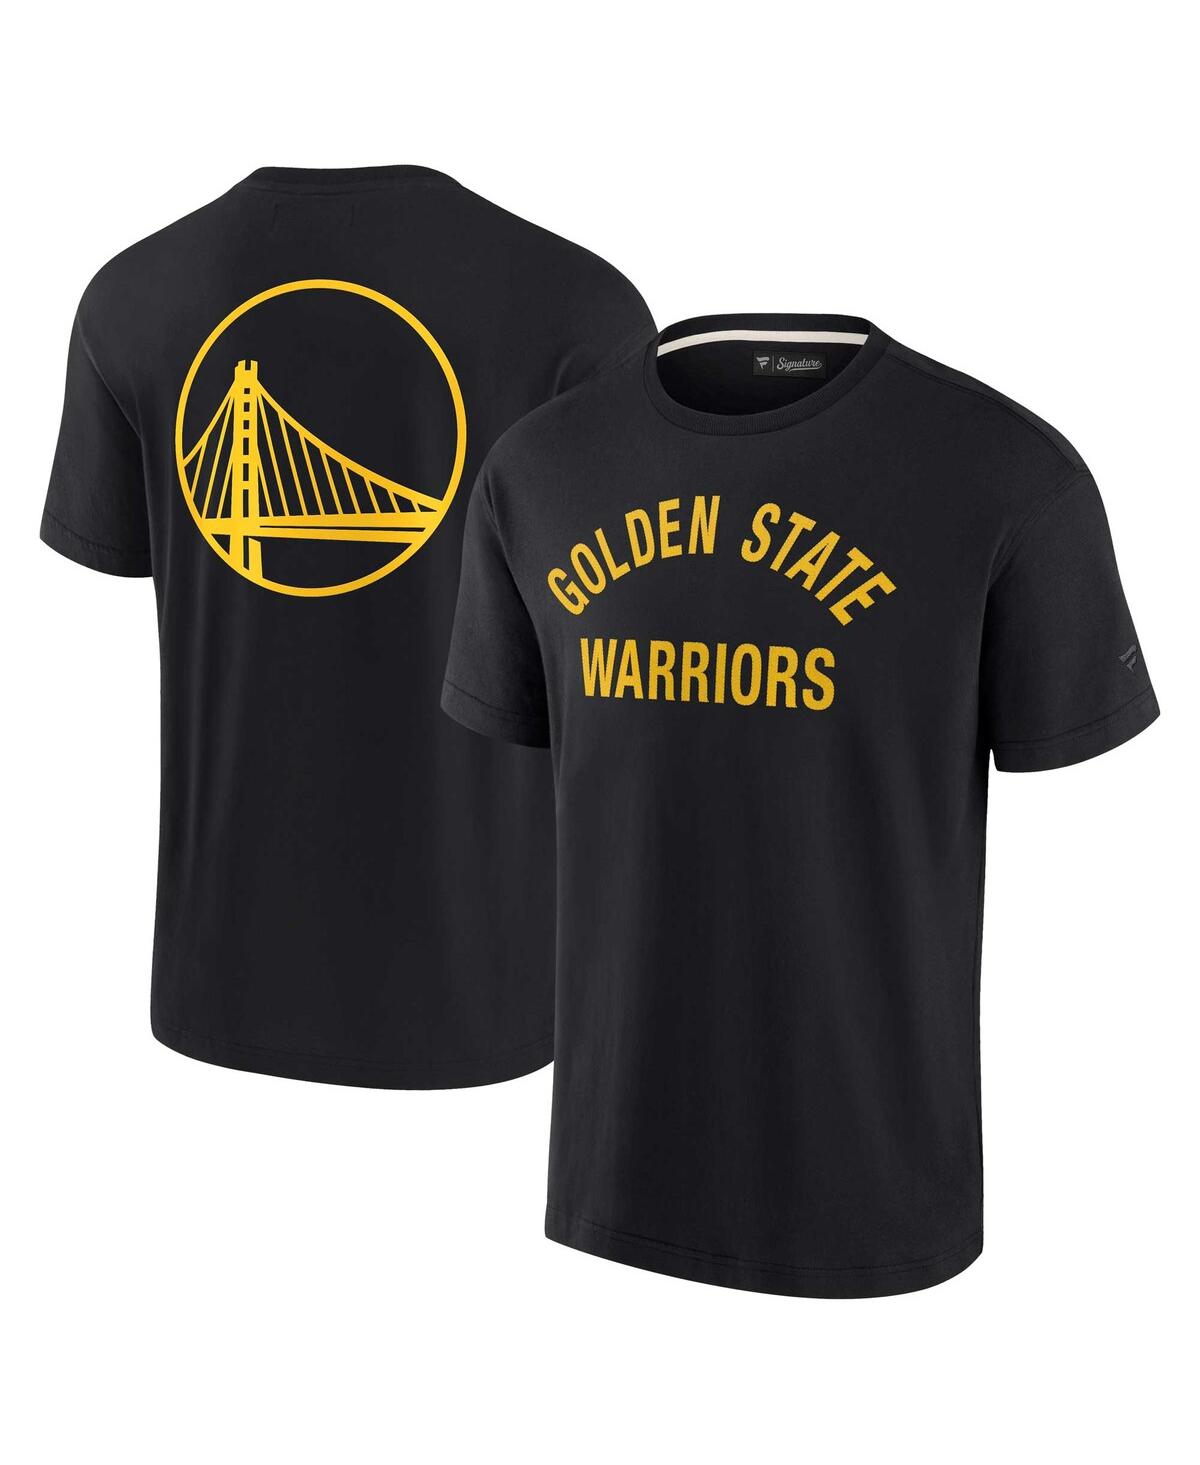 Men's and Women's Fanatics Signature Black Golden State Warriors Super Soft T-shirt - Black